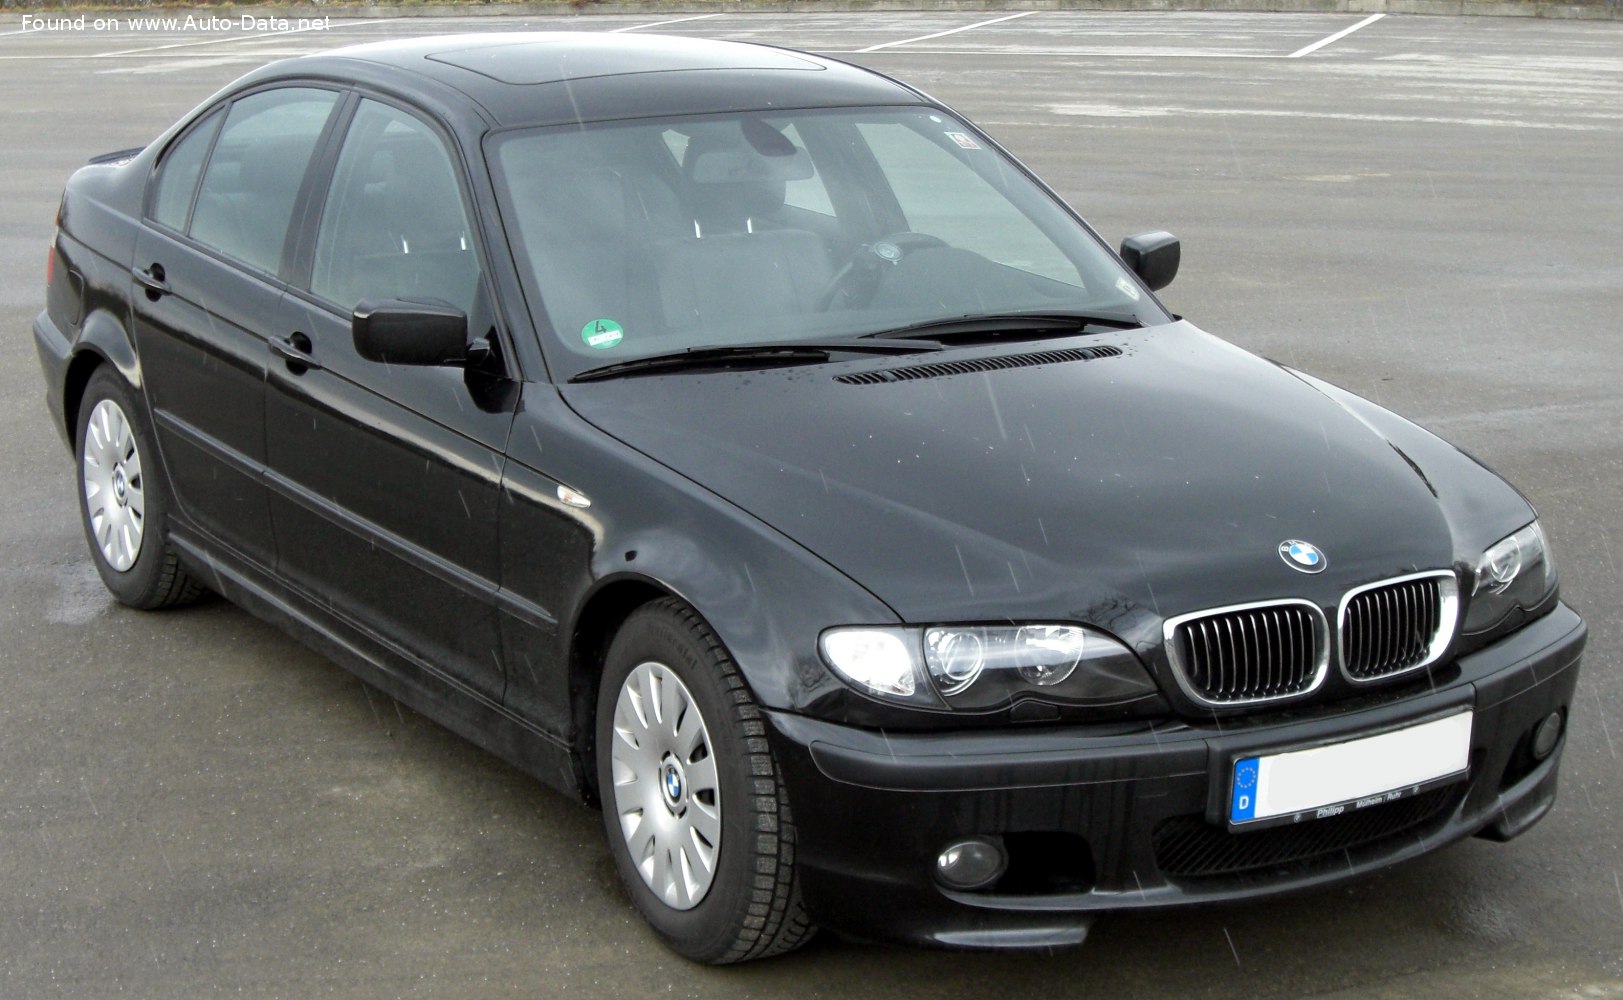 2001 BMW 3er Limousine (E46, facelift 2001) 320i (170 PS